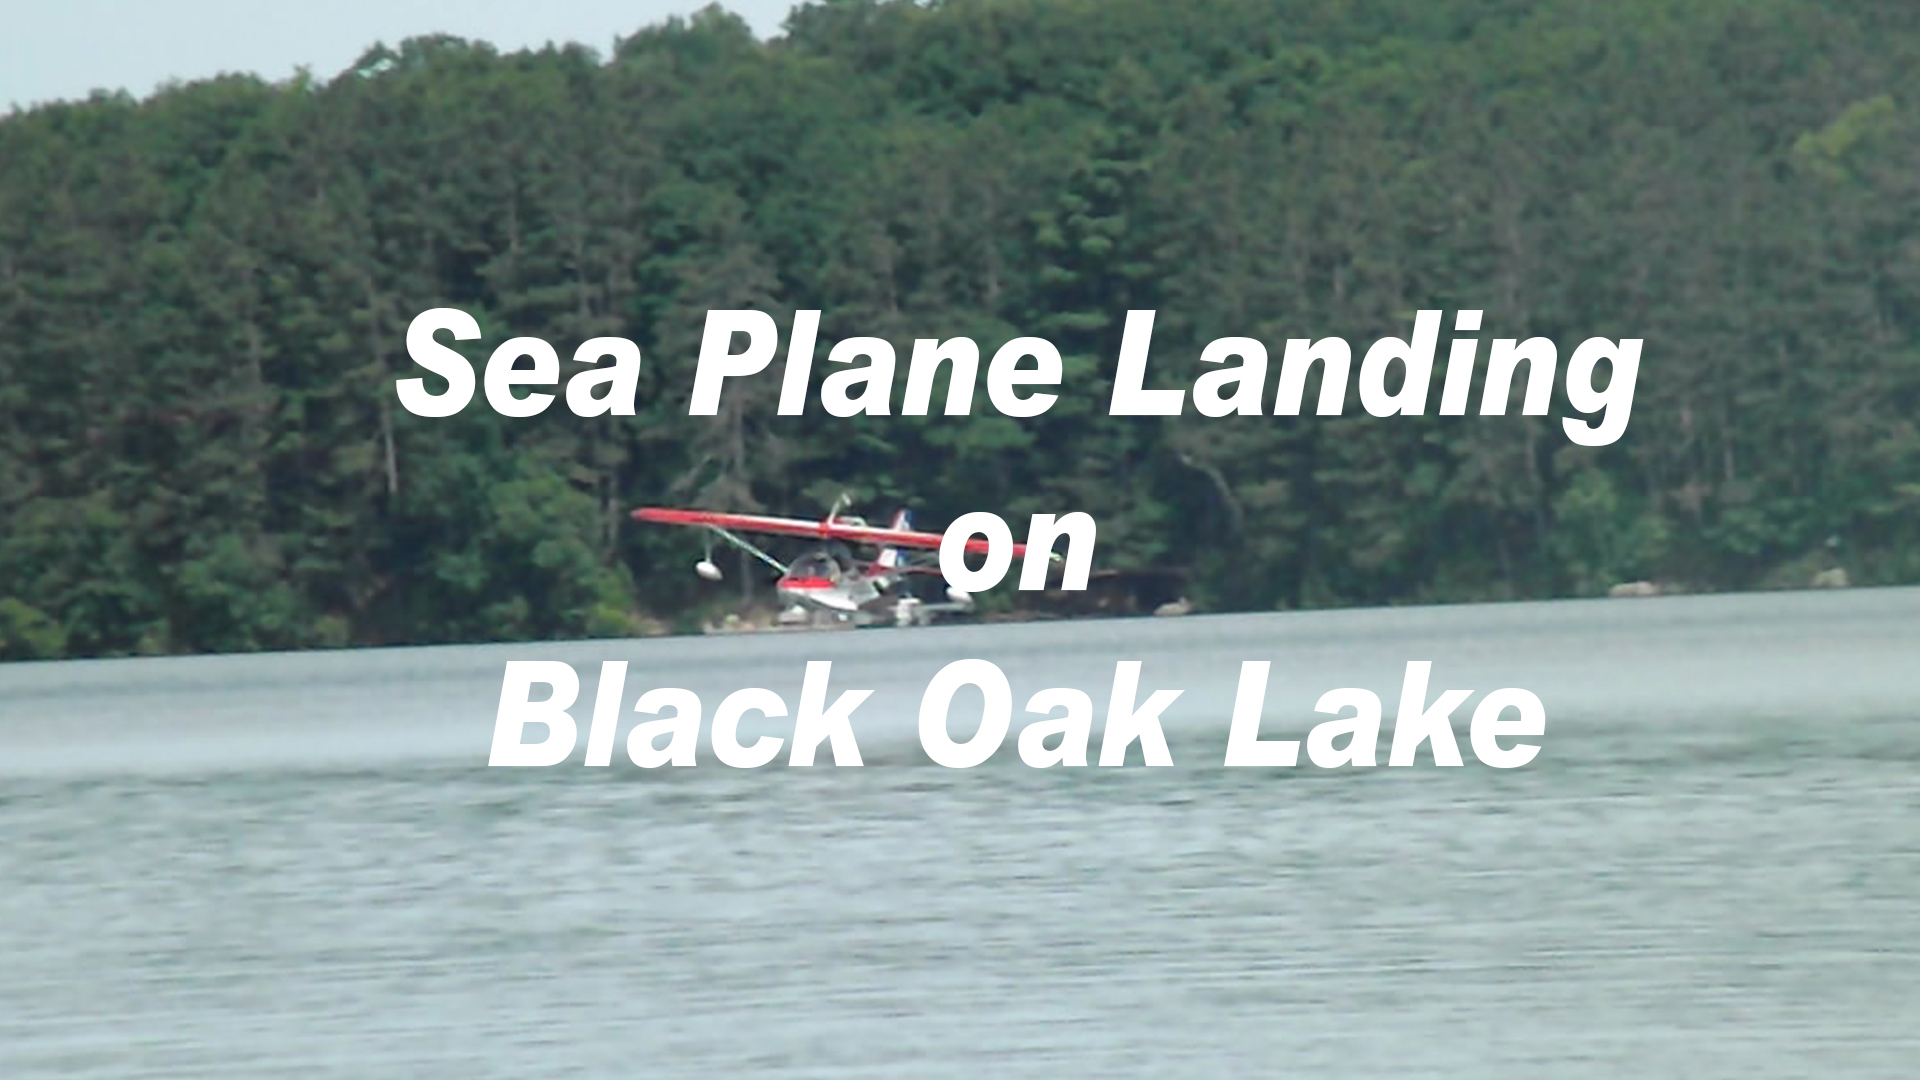 Sea Plane on Black Oak Lake